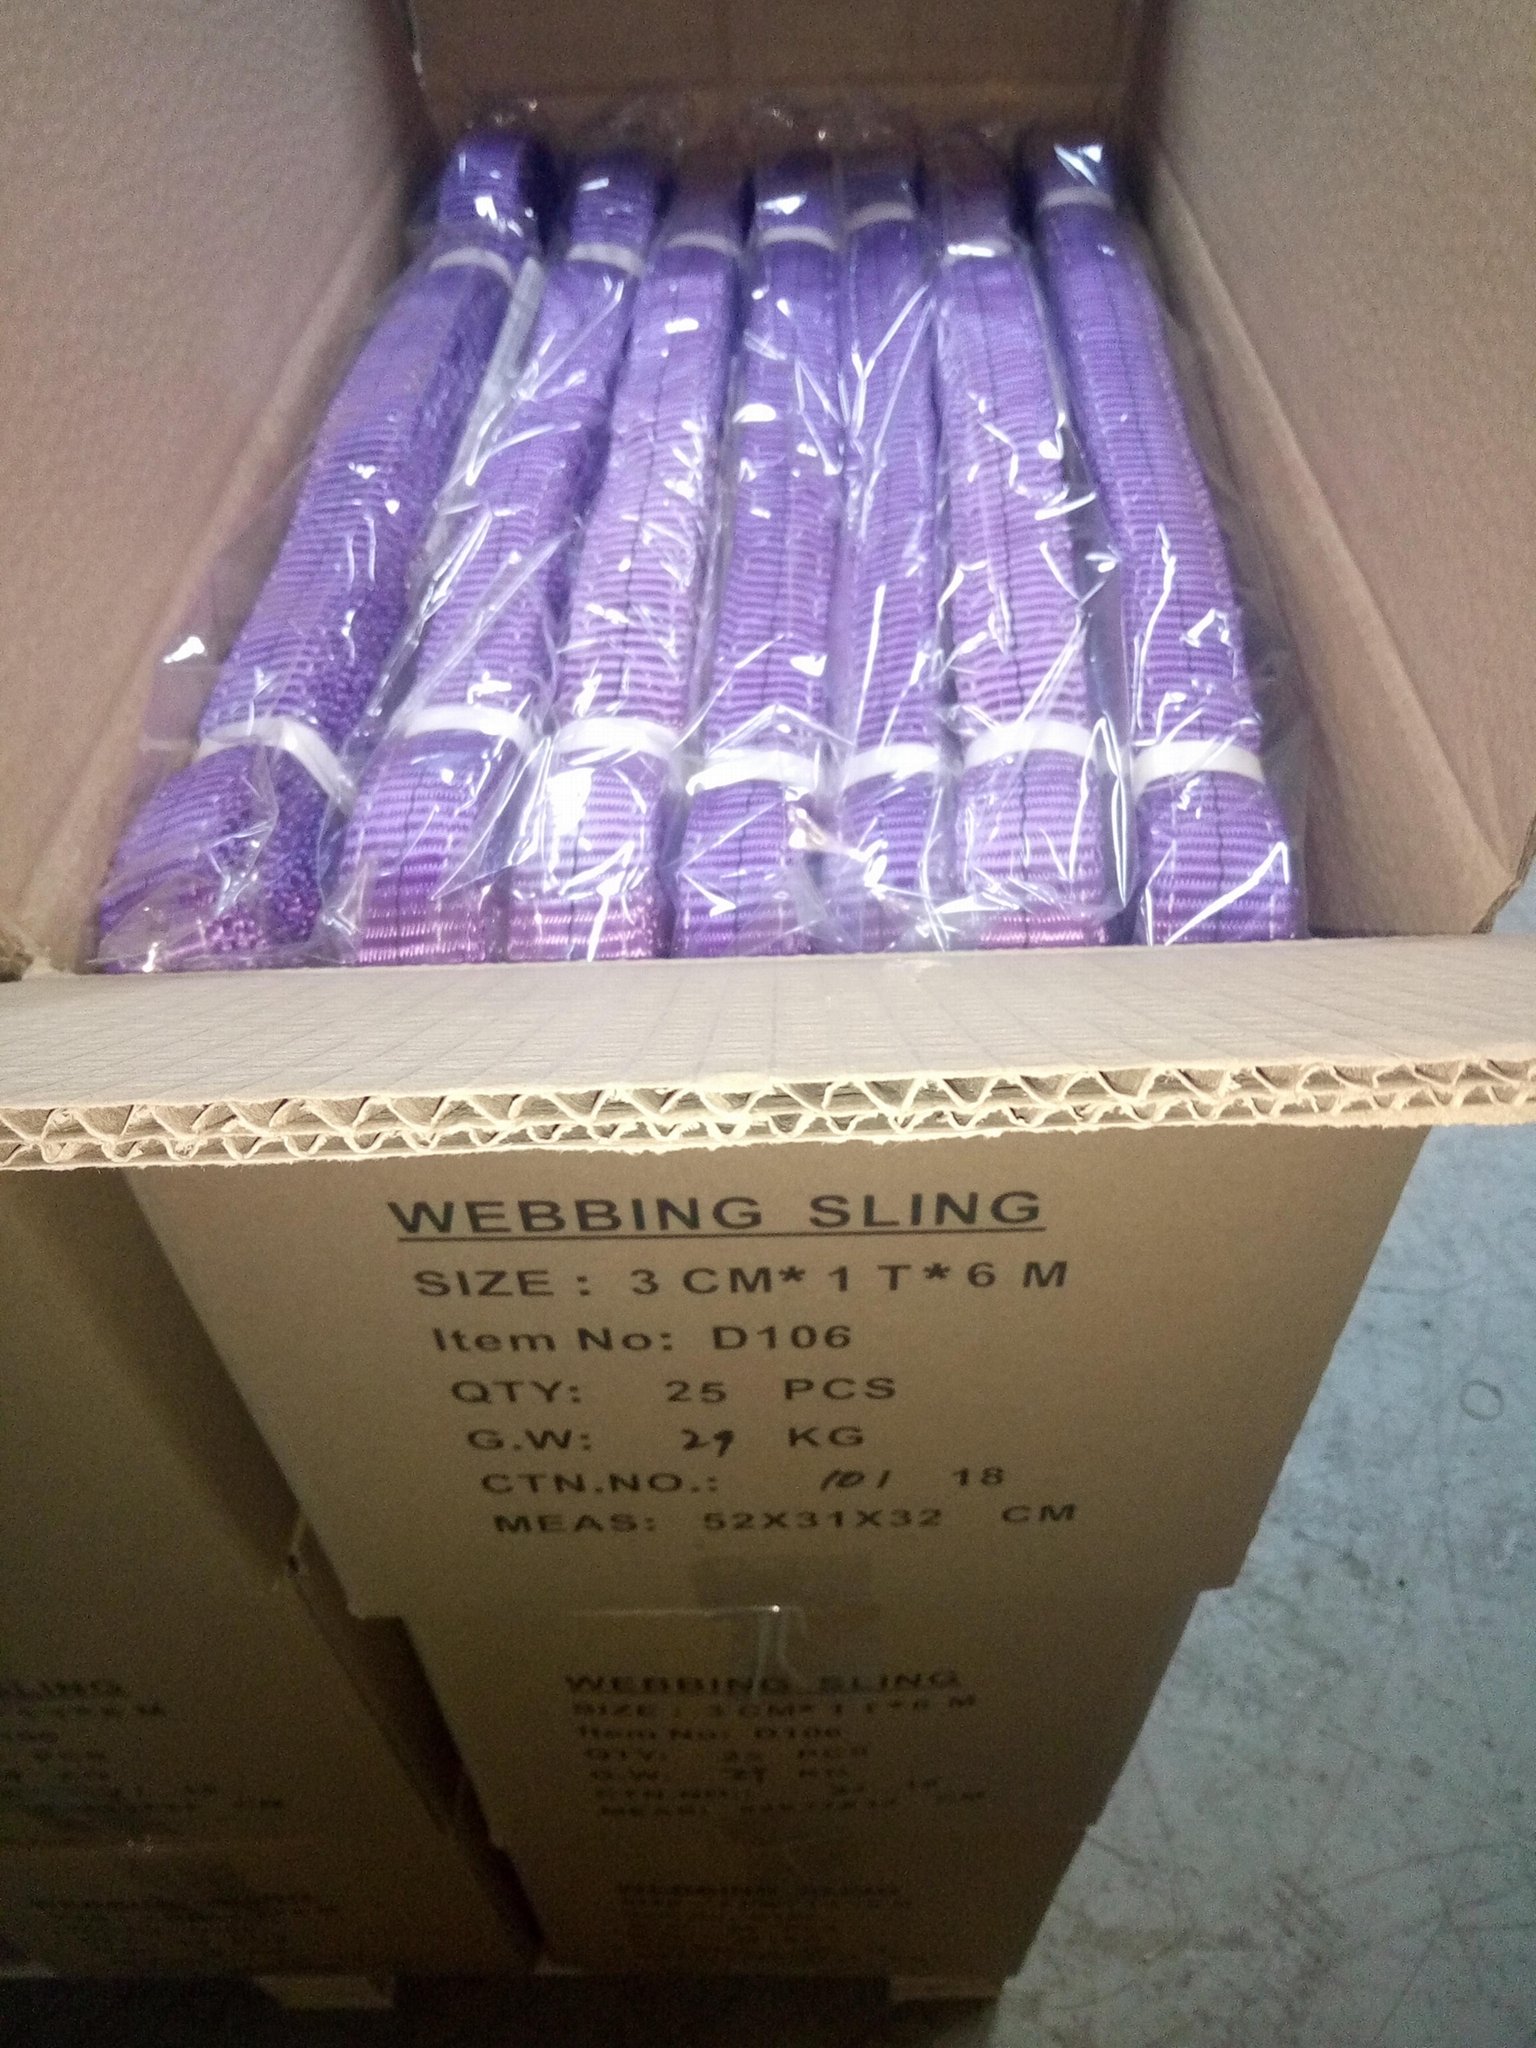 Duplex flat webbing sling for lifting 4